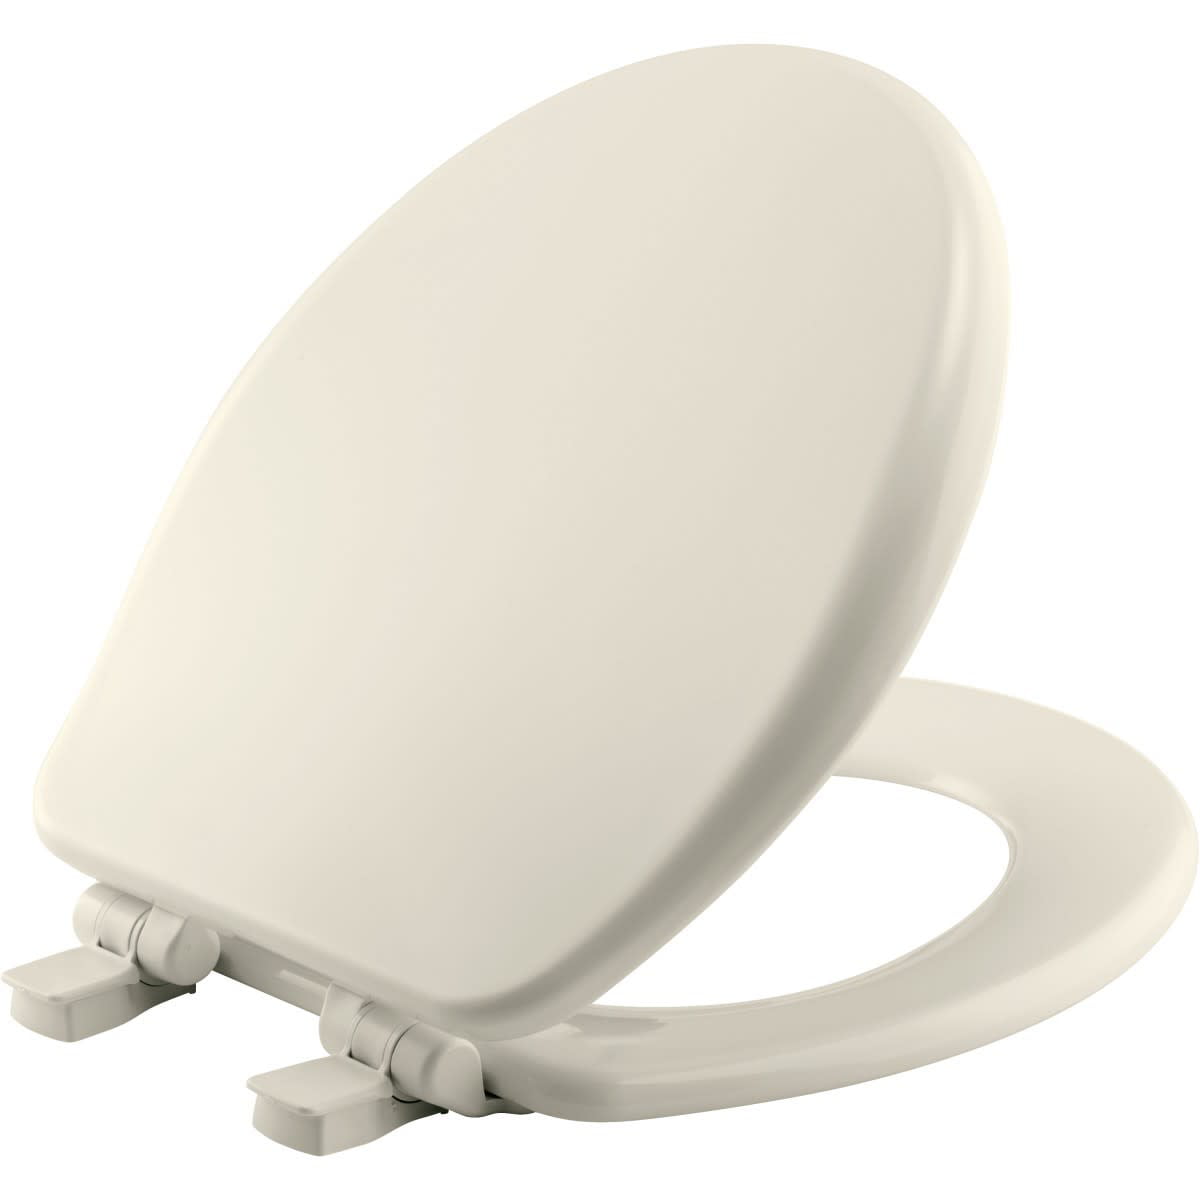 Bemis Round Plastic Toilet Seat in White 200E3 000 